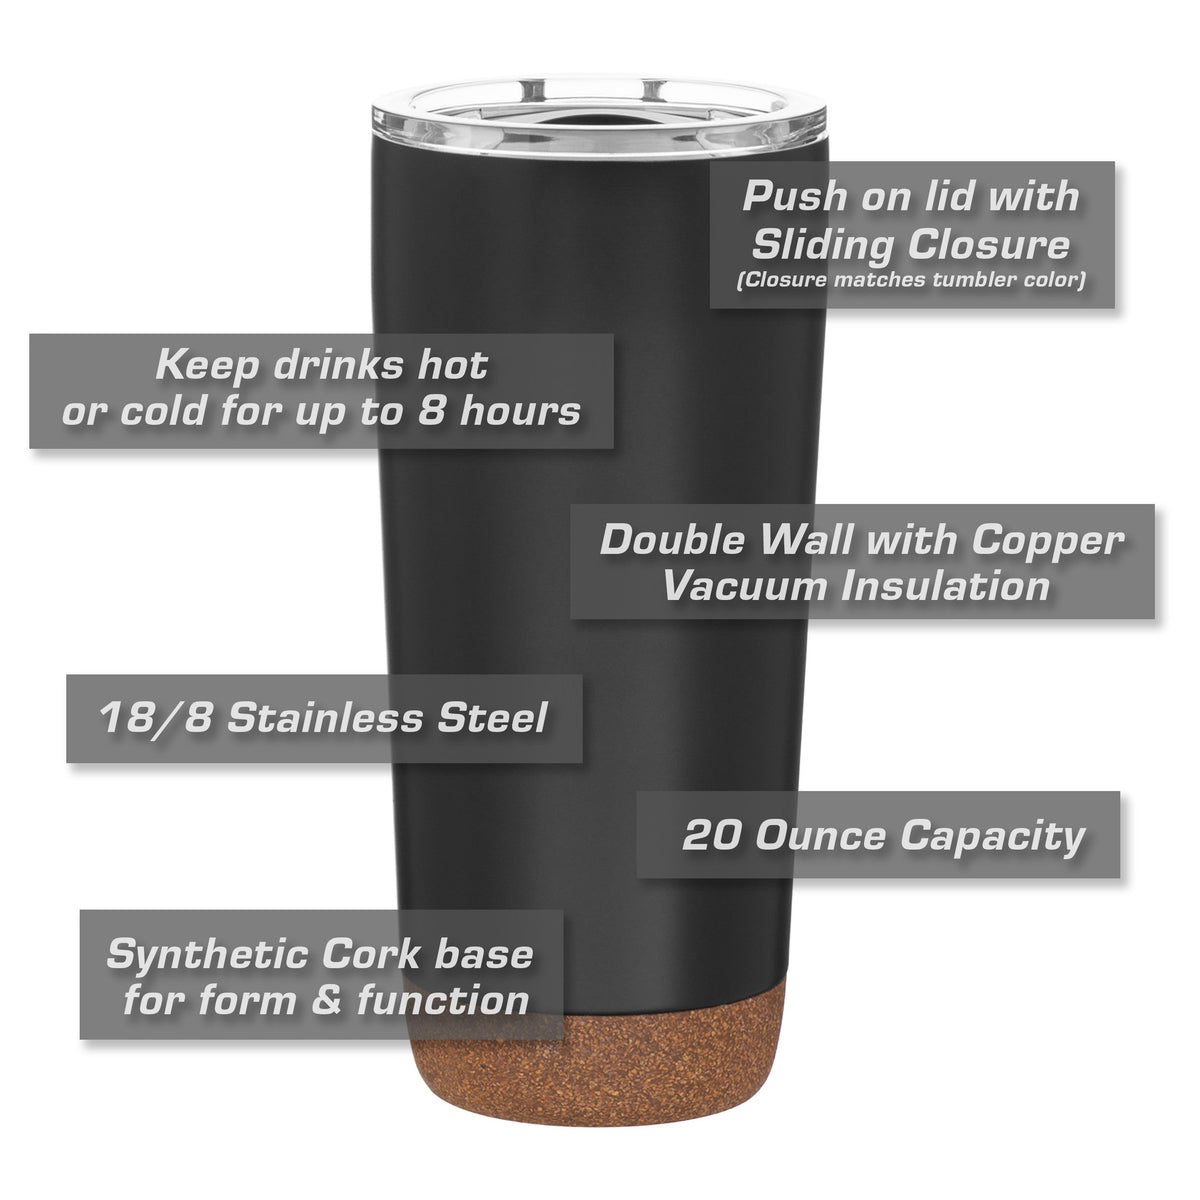 DMC DeLorean Insulated Stainless Steel Coffee Tumbler - 20 oz